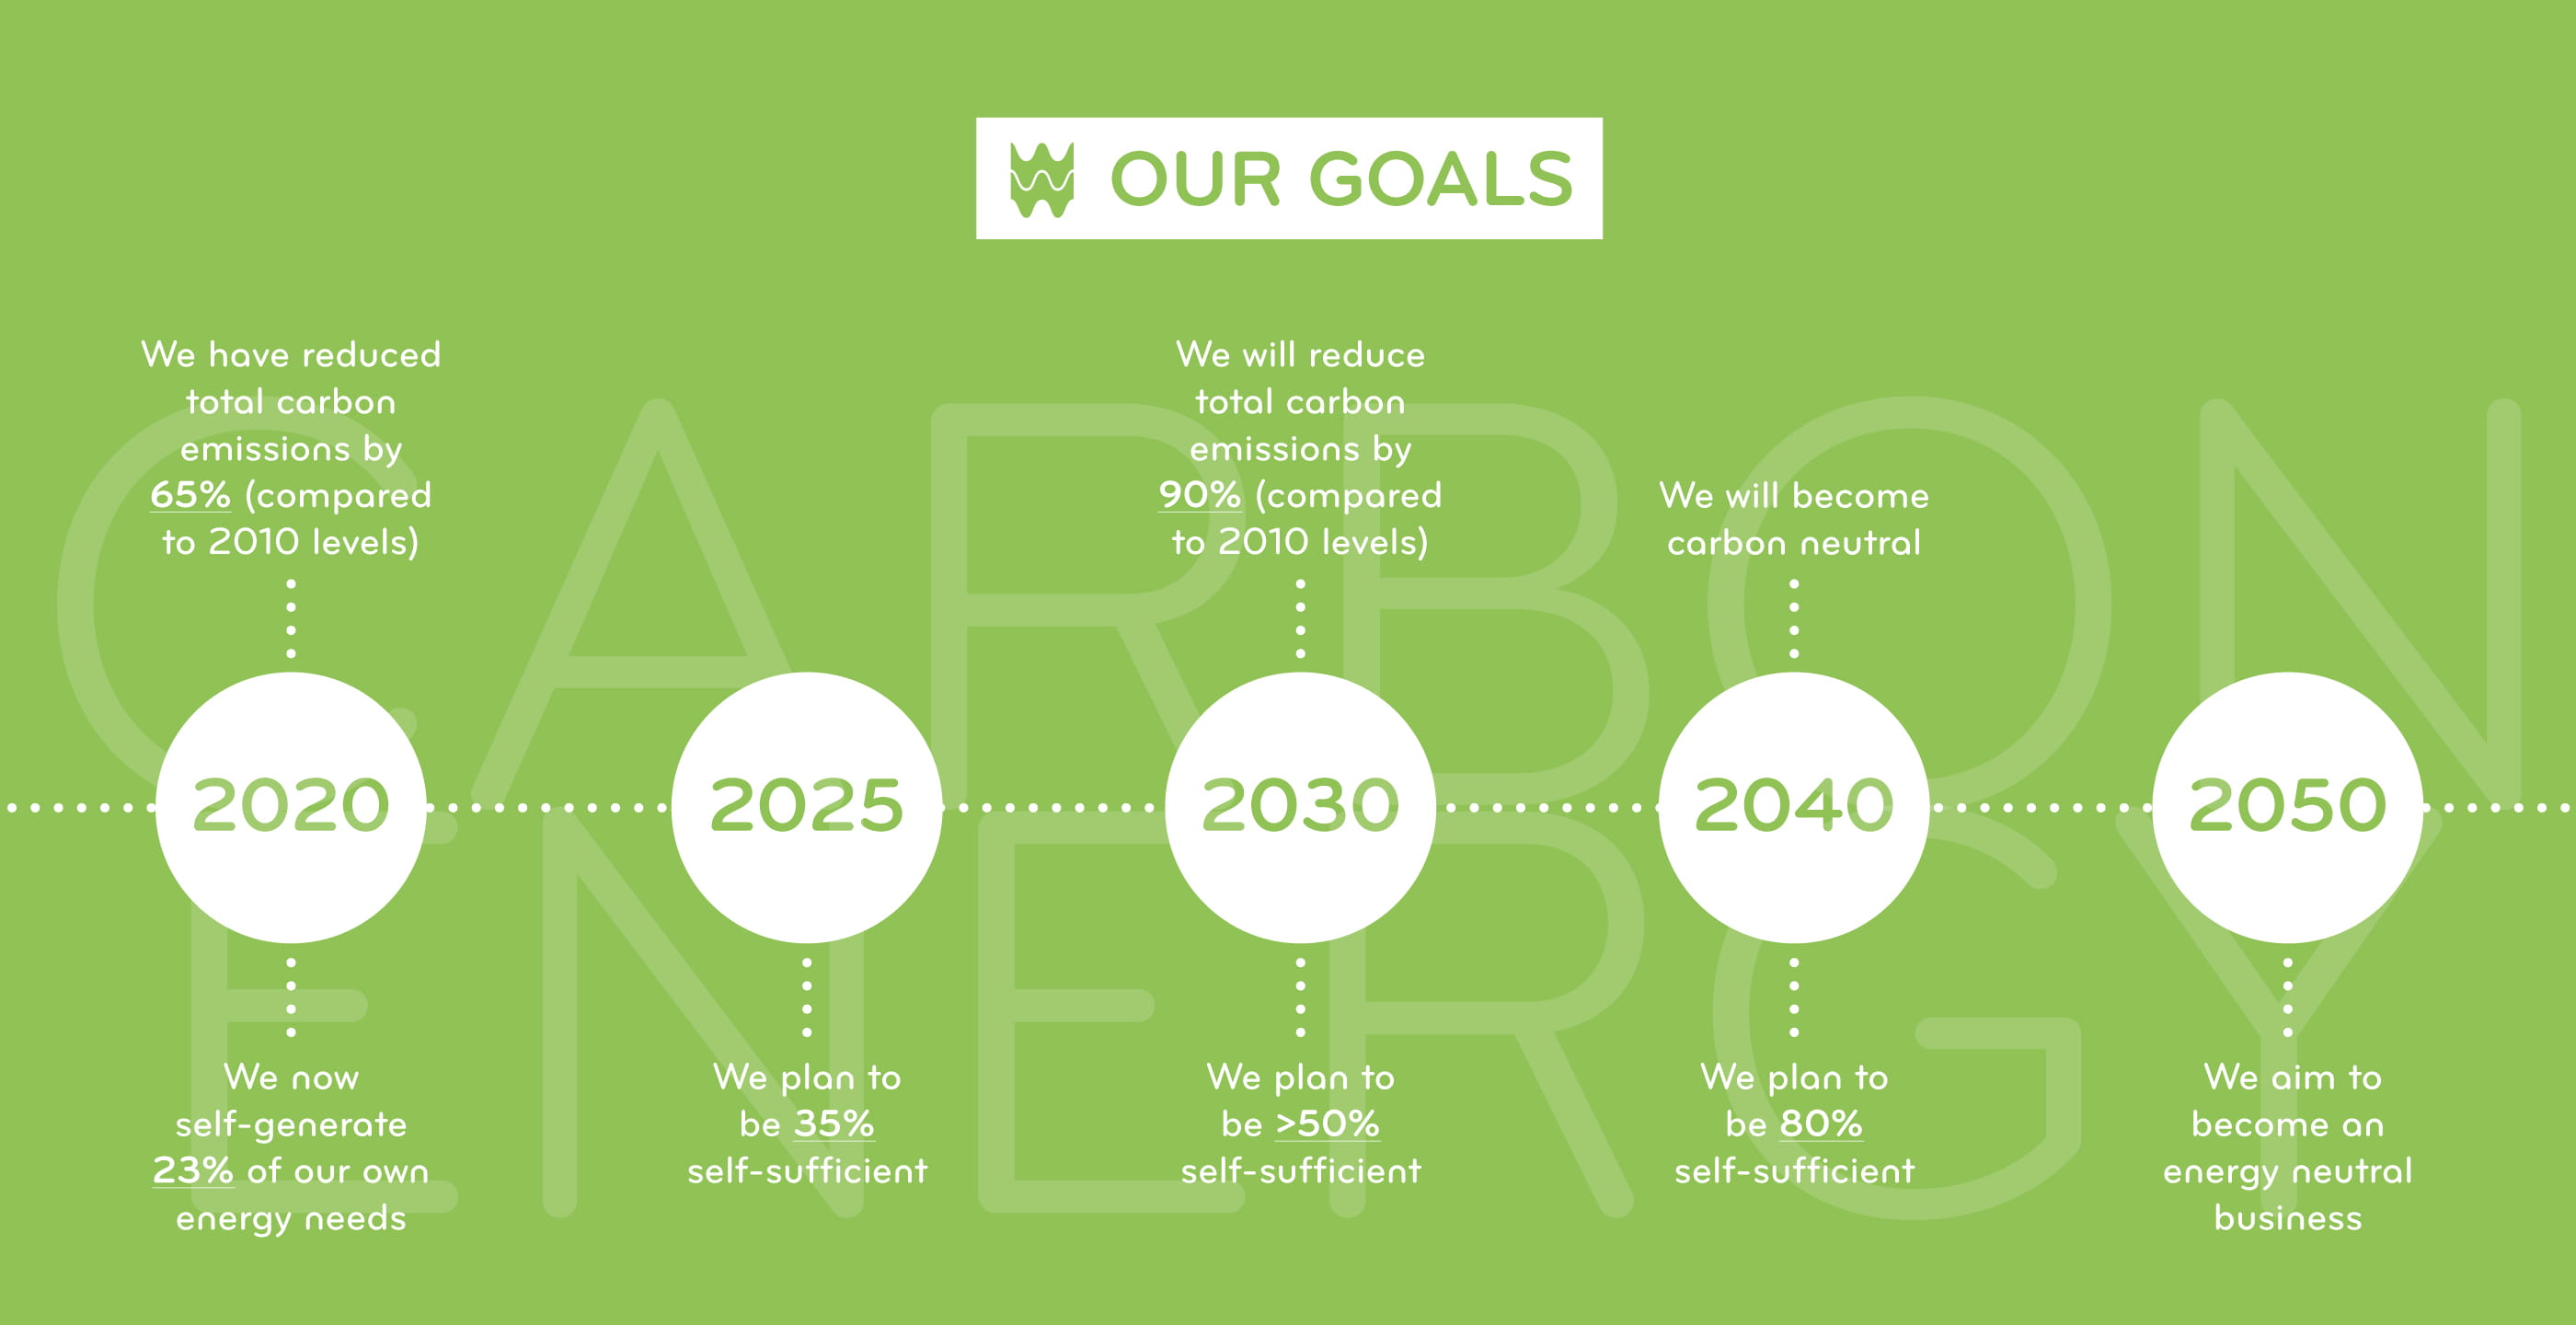 Our Goals - Journey To Zero